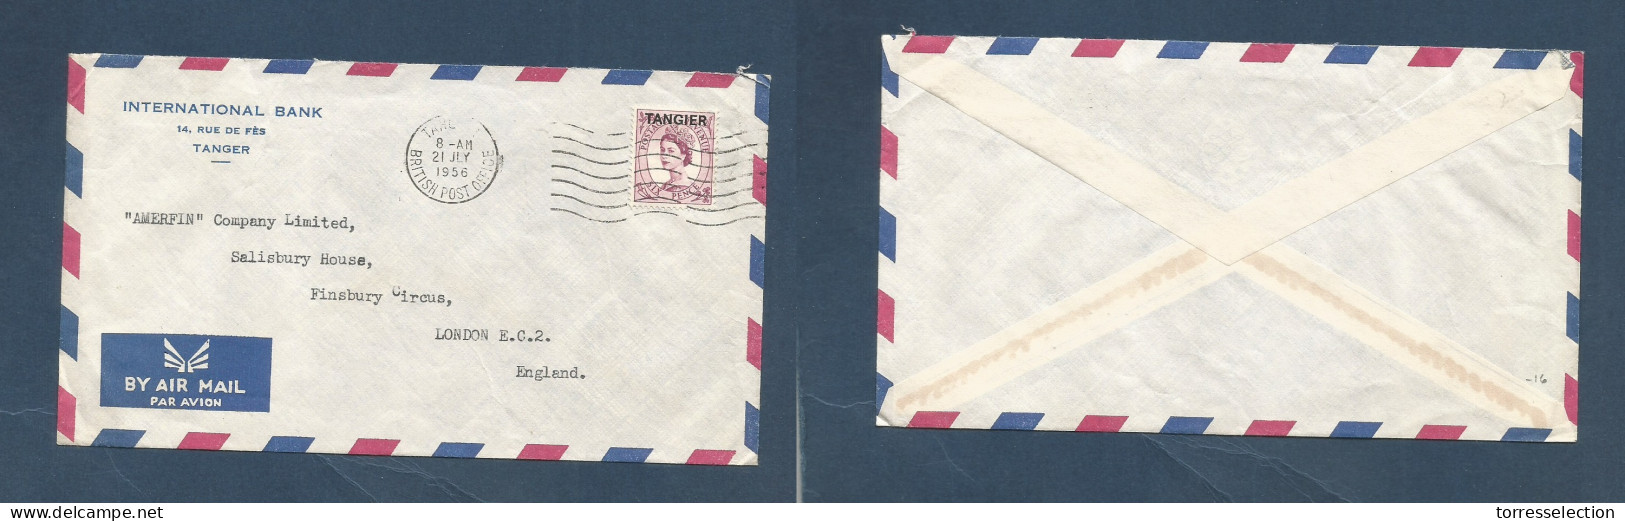 MARRUECOS - British. 1956 (21 July) Tanger - London, UK. Air 6d QEII Ovptd Issue Fkd Envelope Rolling Cachet. Fine. - Morocco (1956-...)